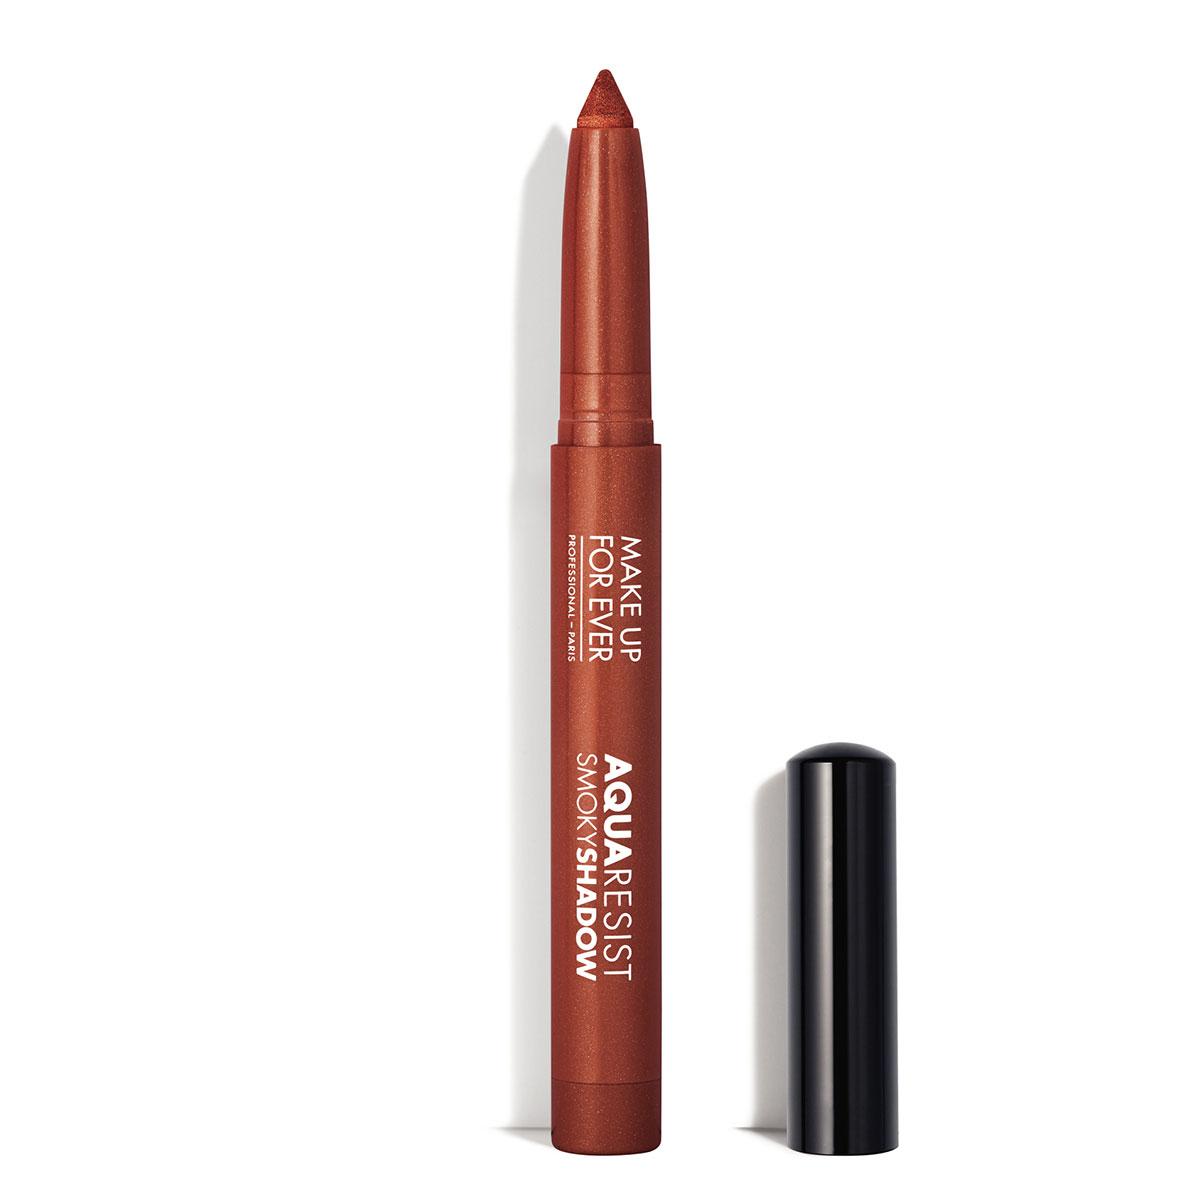 Make Up For Ever Aqua Resist Smoky Shadow Multi Use Eye Color Stick 07 Volcano - Reddish Brown